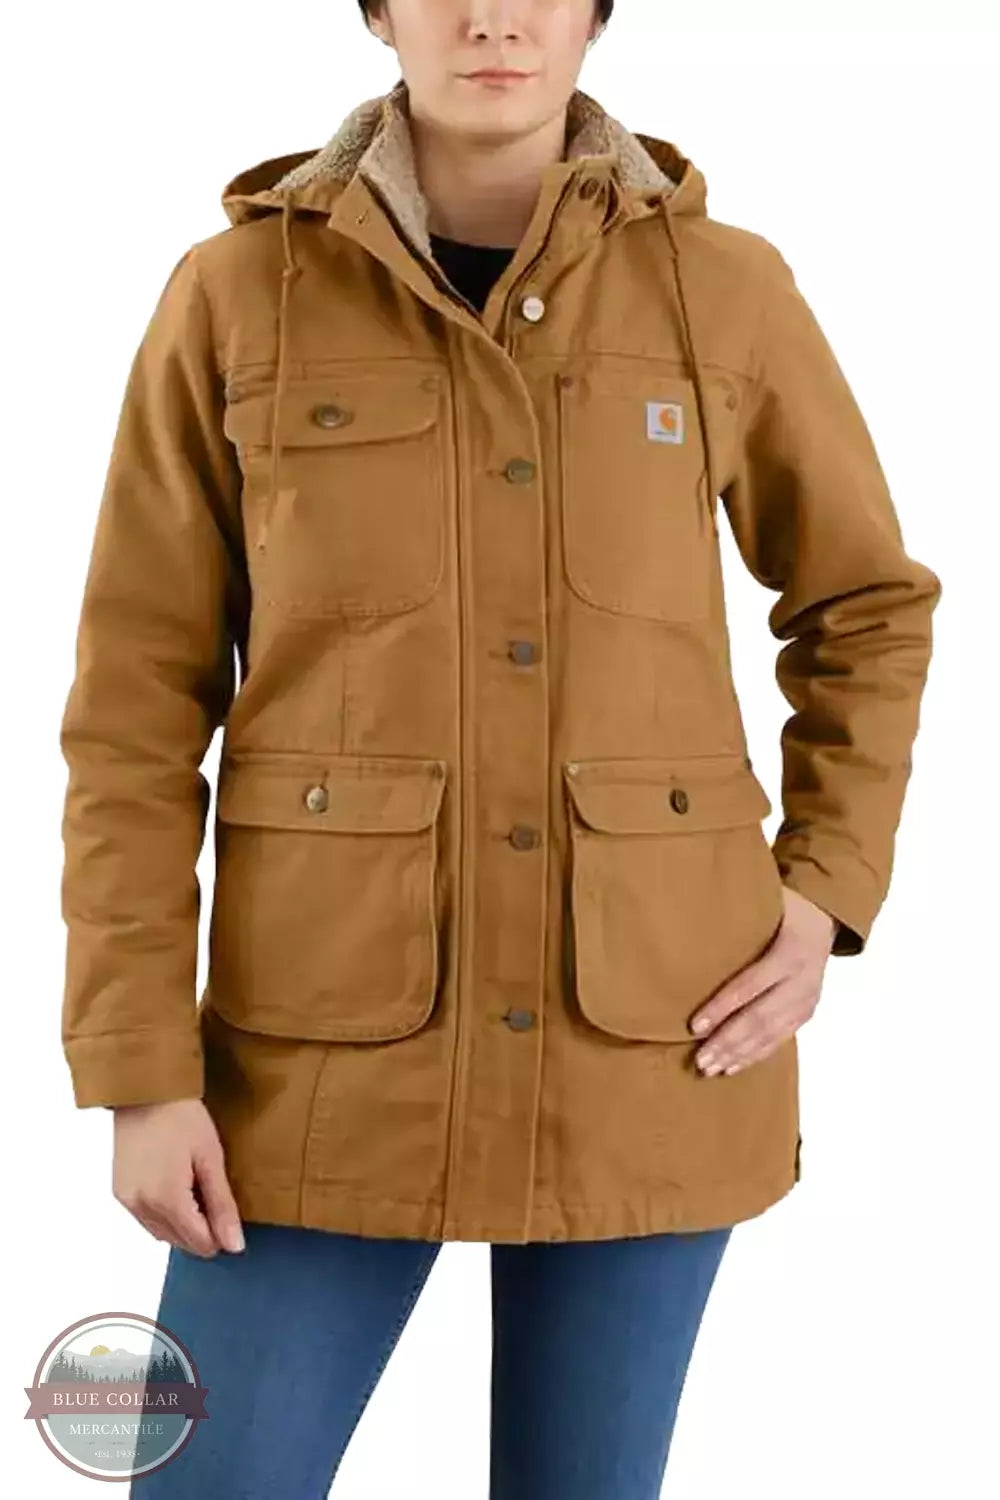 Carhartt, Jackets & Coats, Carhartt Detachable Hood